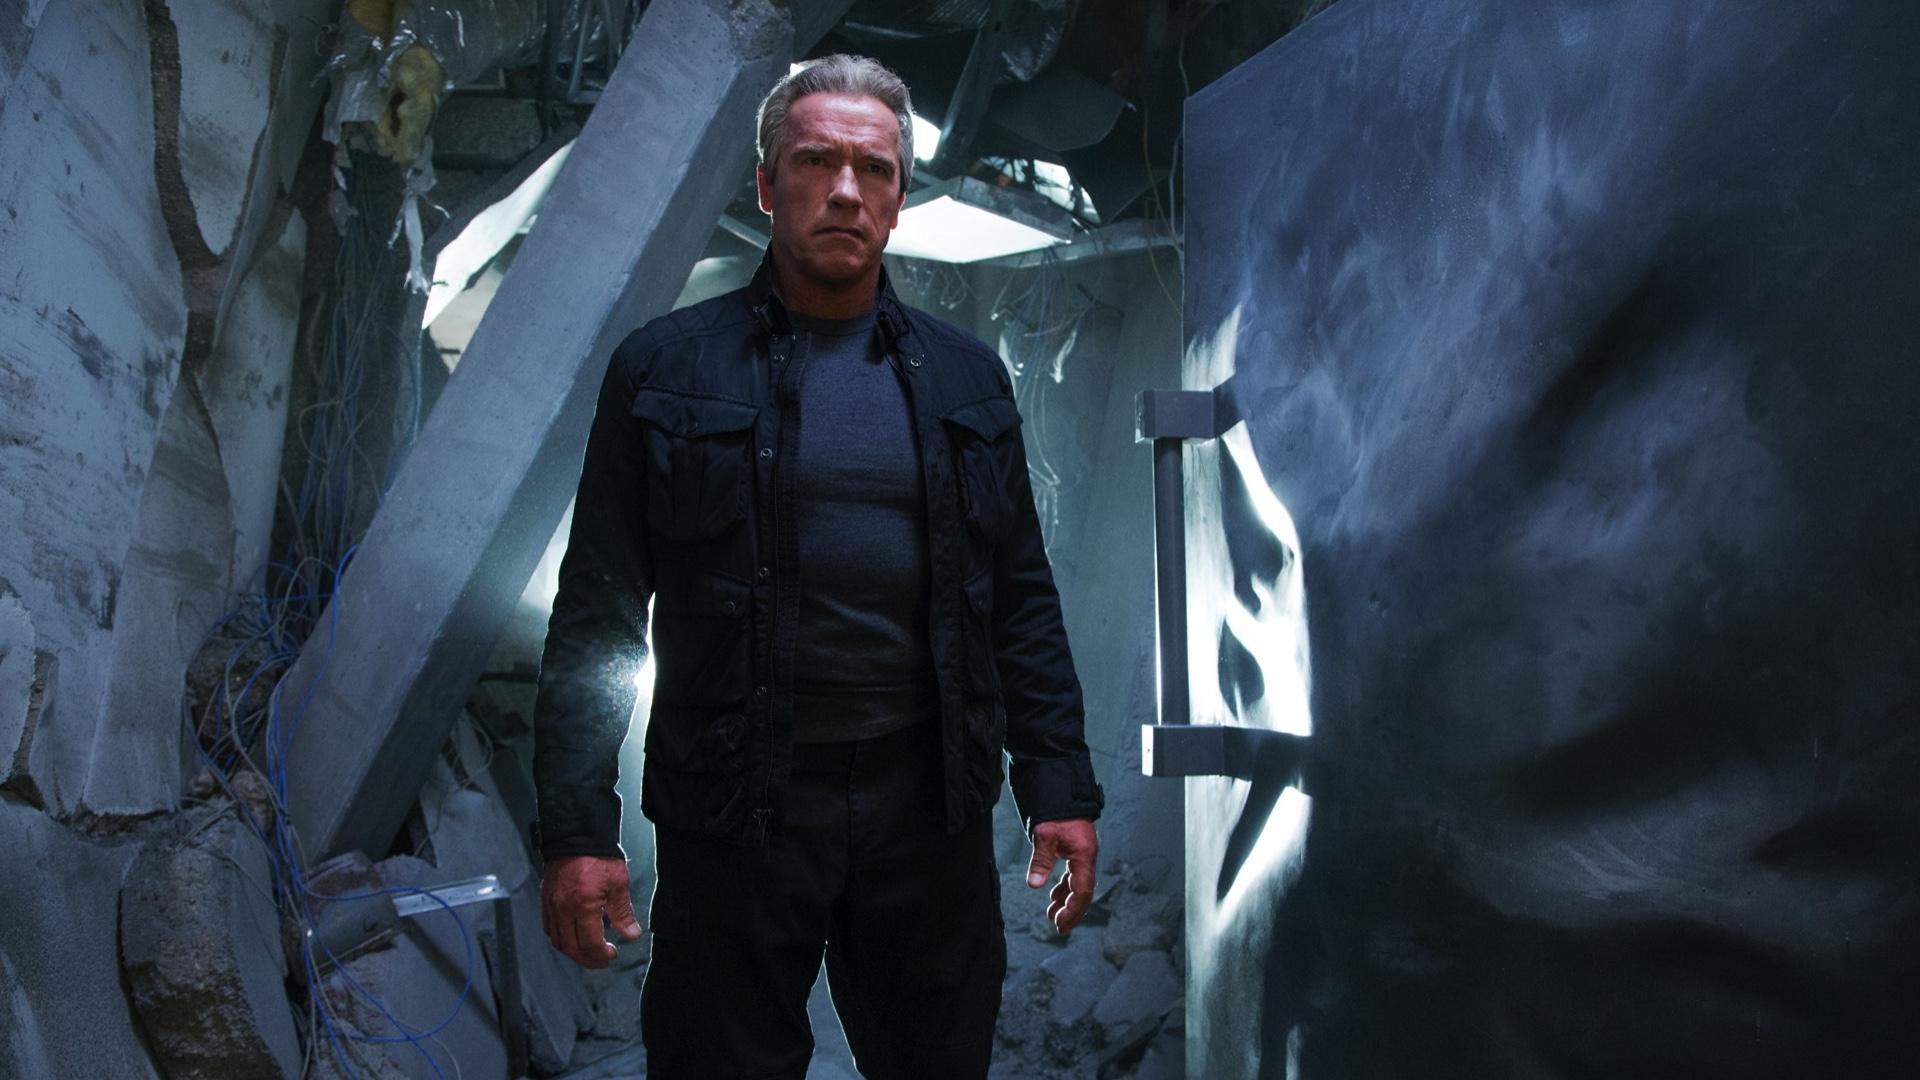 Arnold Schwarzenegger Talks About His New TERMINATOR Film